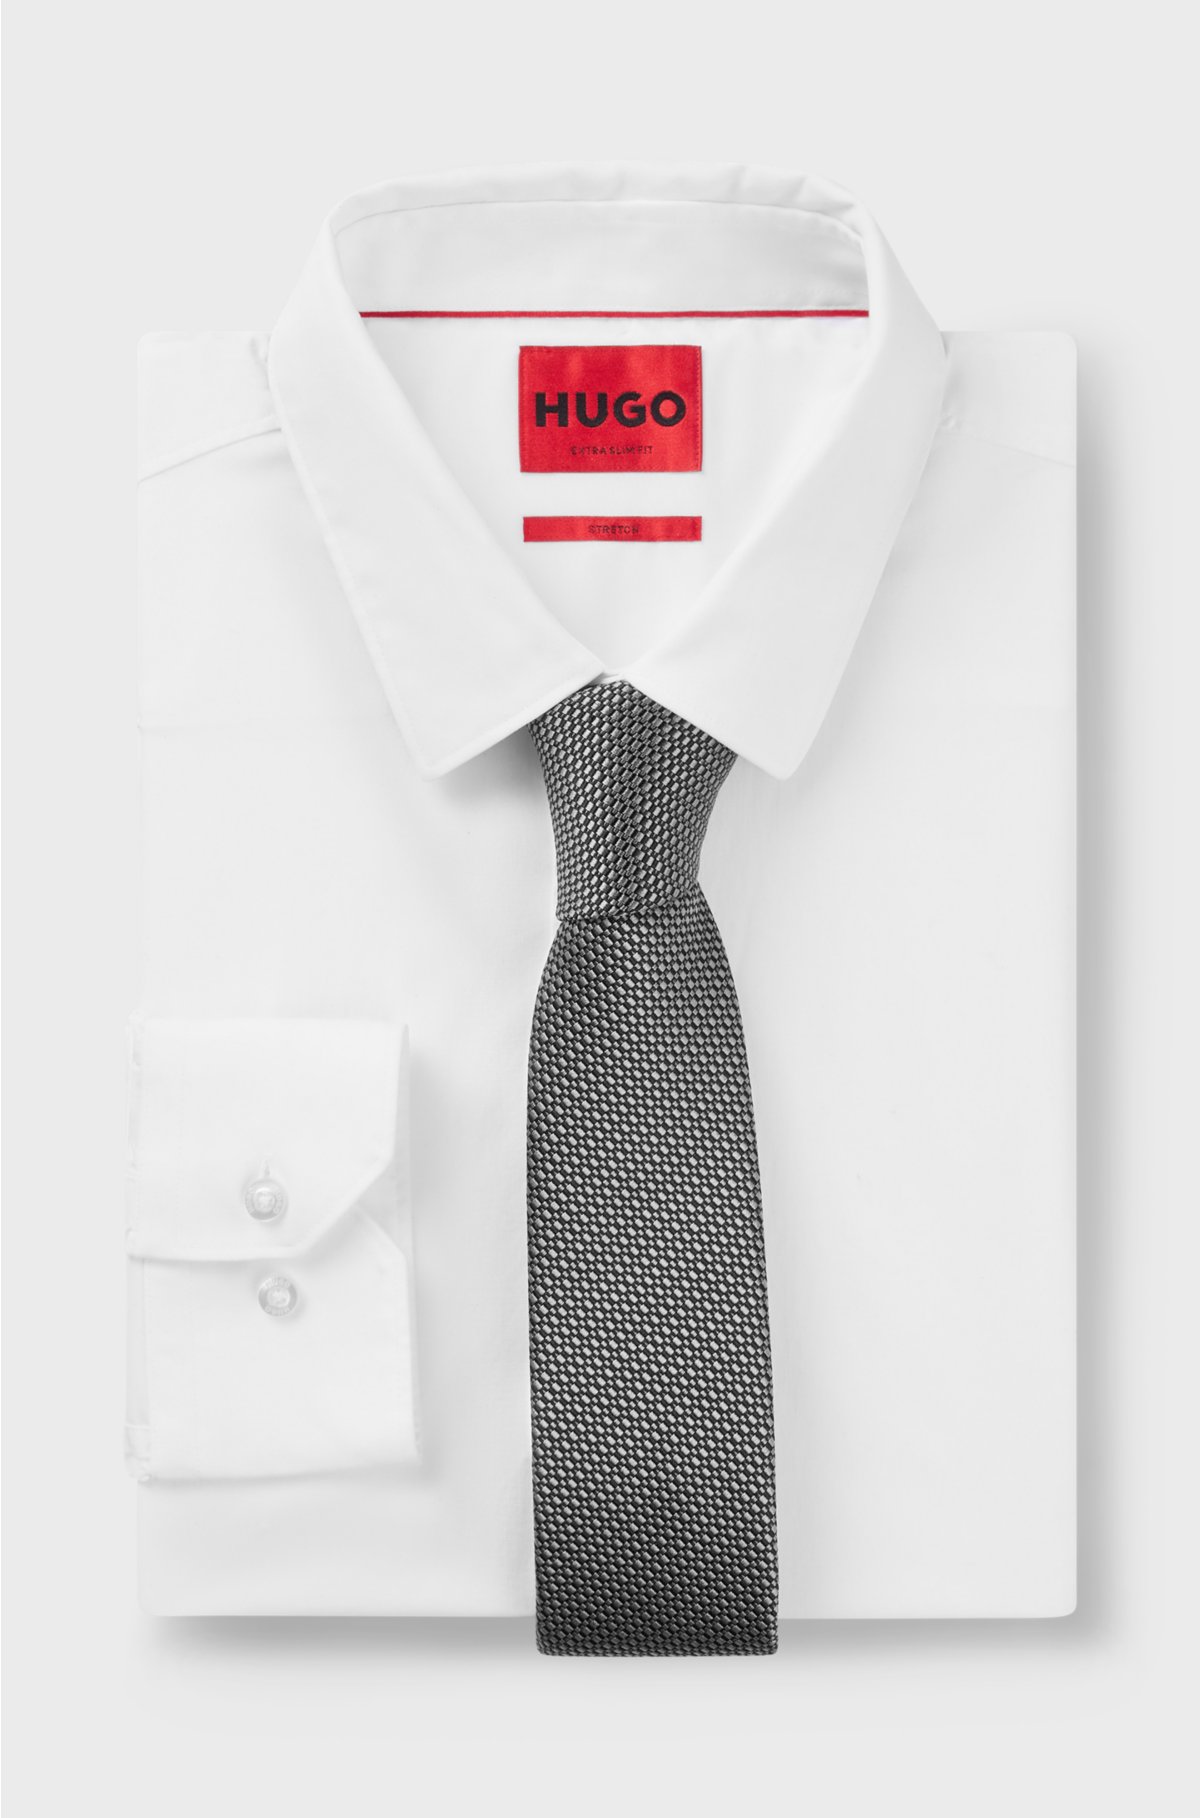 Silk-blend tie with jacquard pattern, Grey